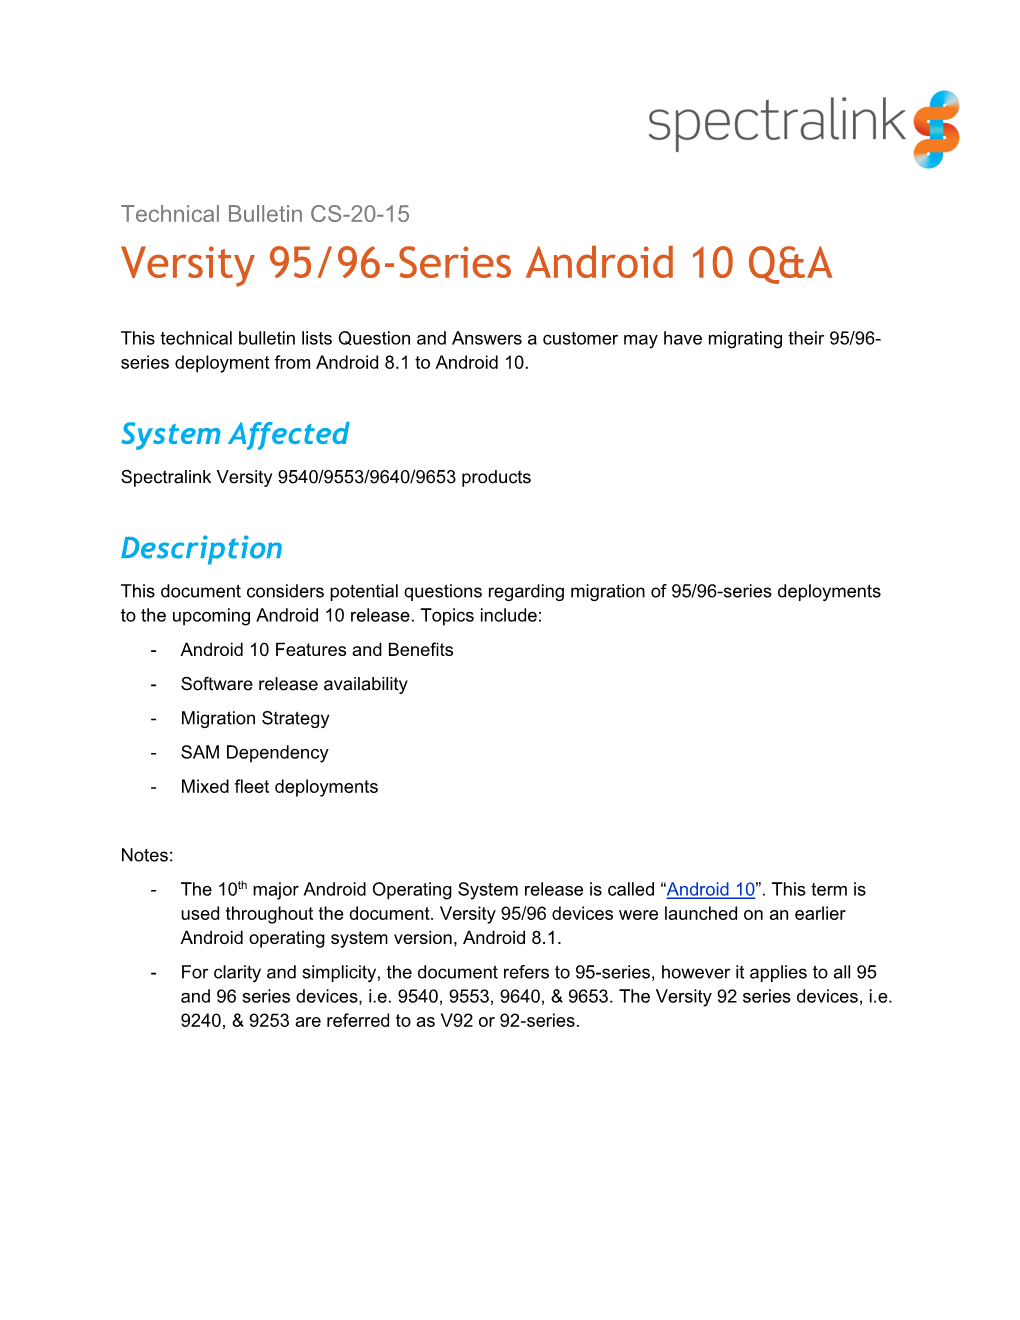 CS-20-15 Versity 95 & 96-Series Android 10 Q&A